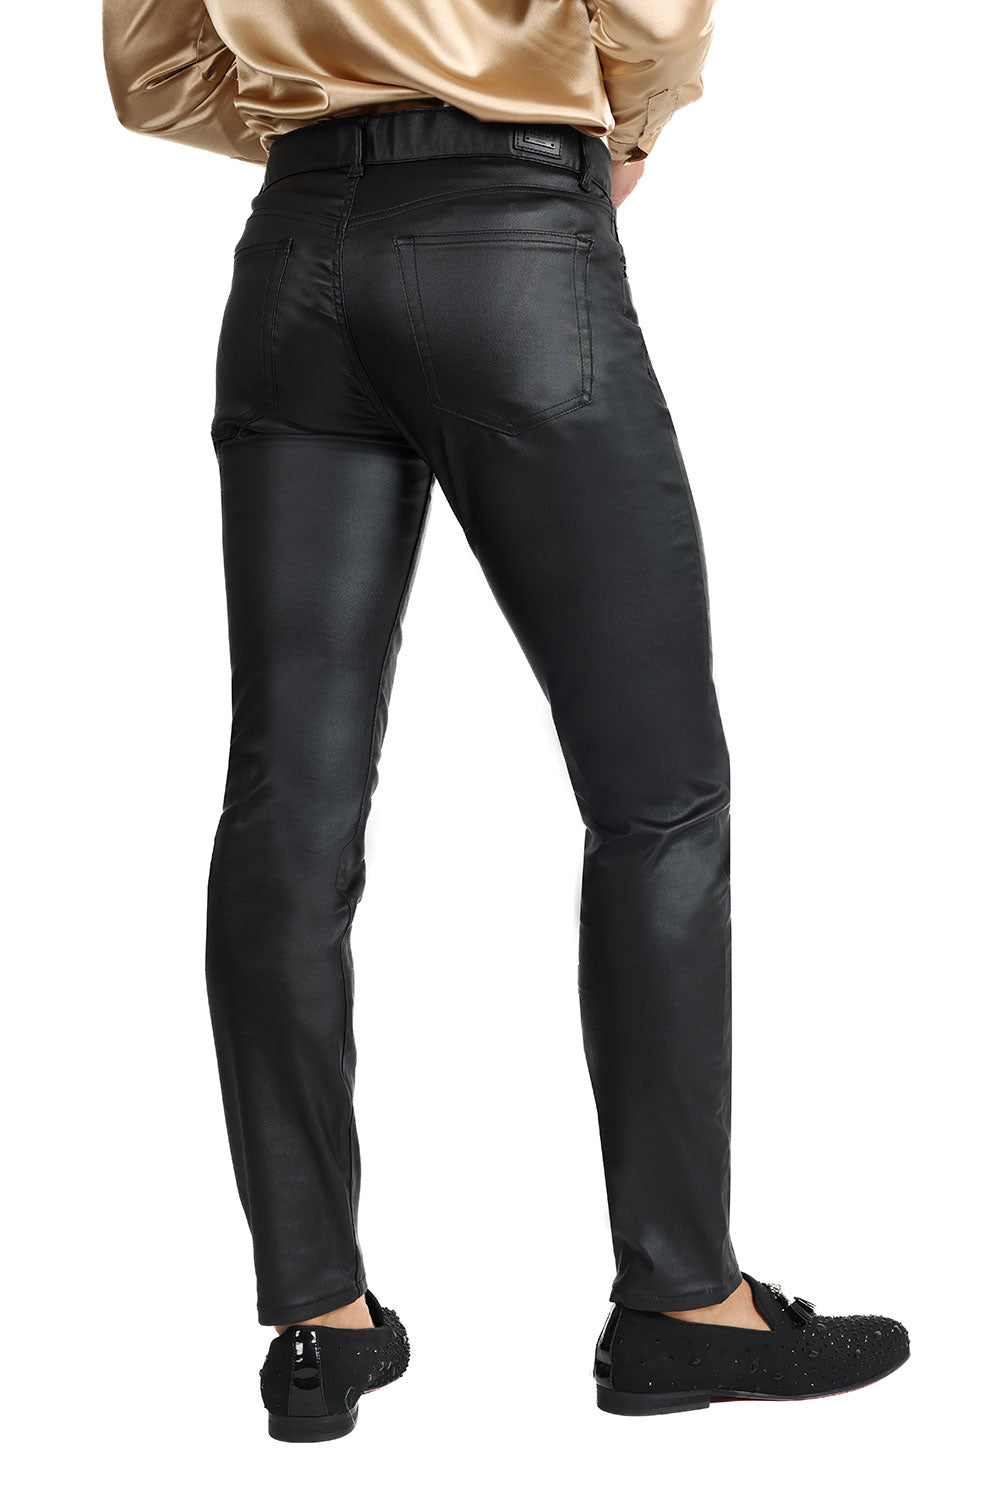 Barabas Men's Glossy Shiny Design Sparkly Luxury Dress Pants 2CPW27 Black